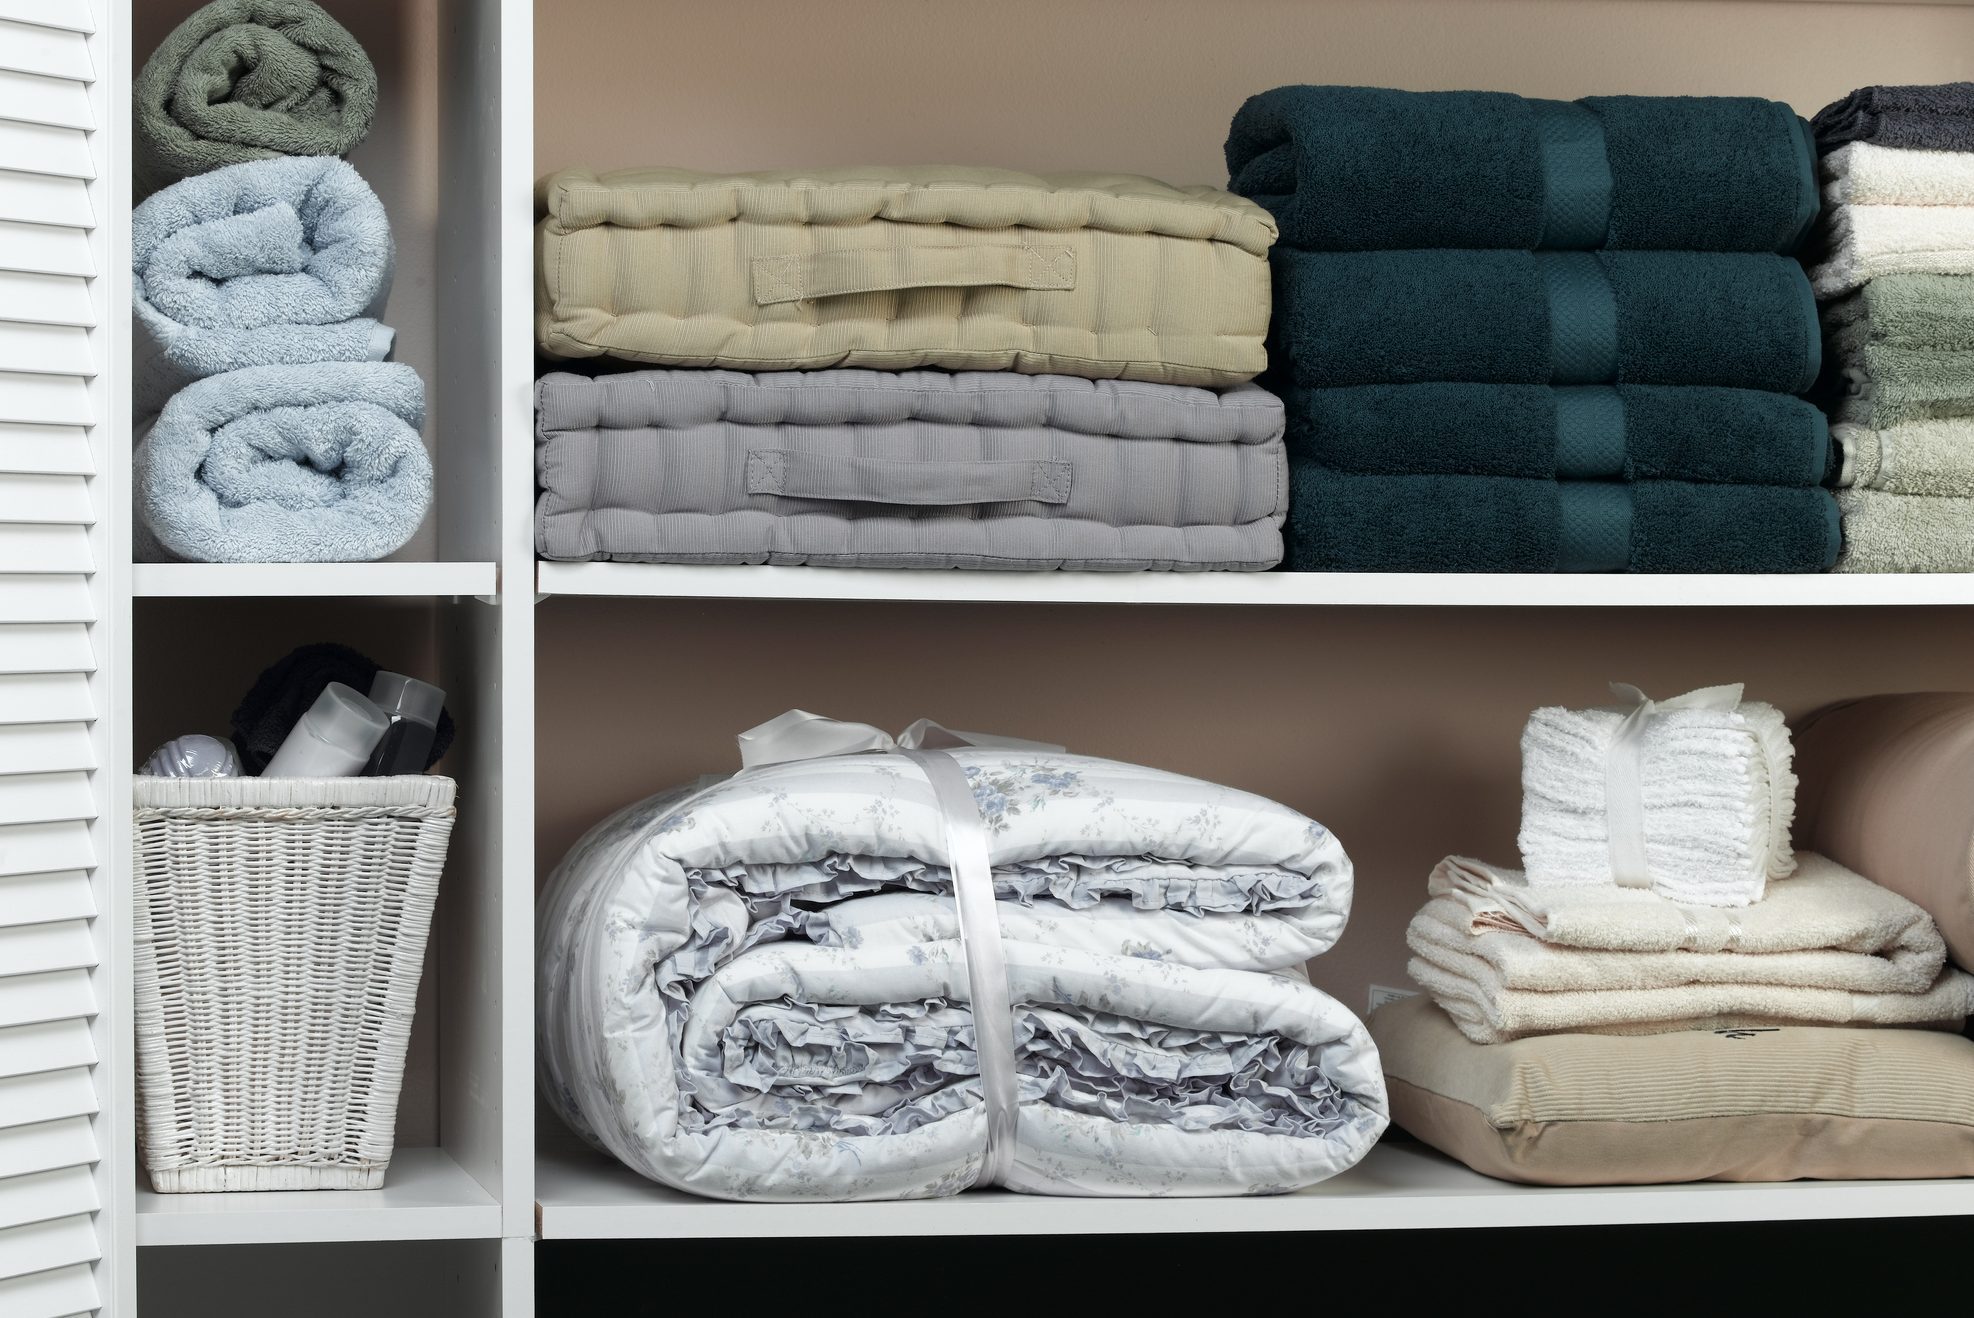 Linen Closet Organization: Ideas on Storage, Folding, and More